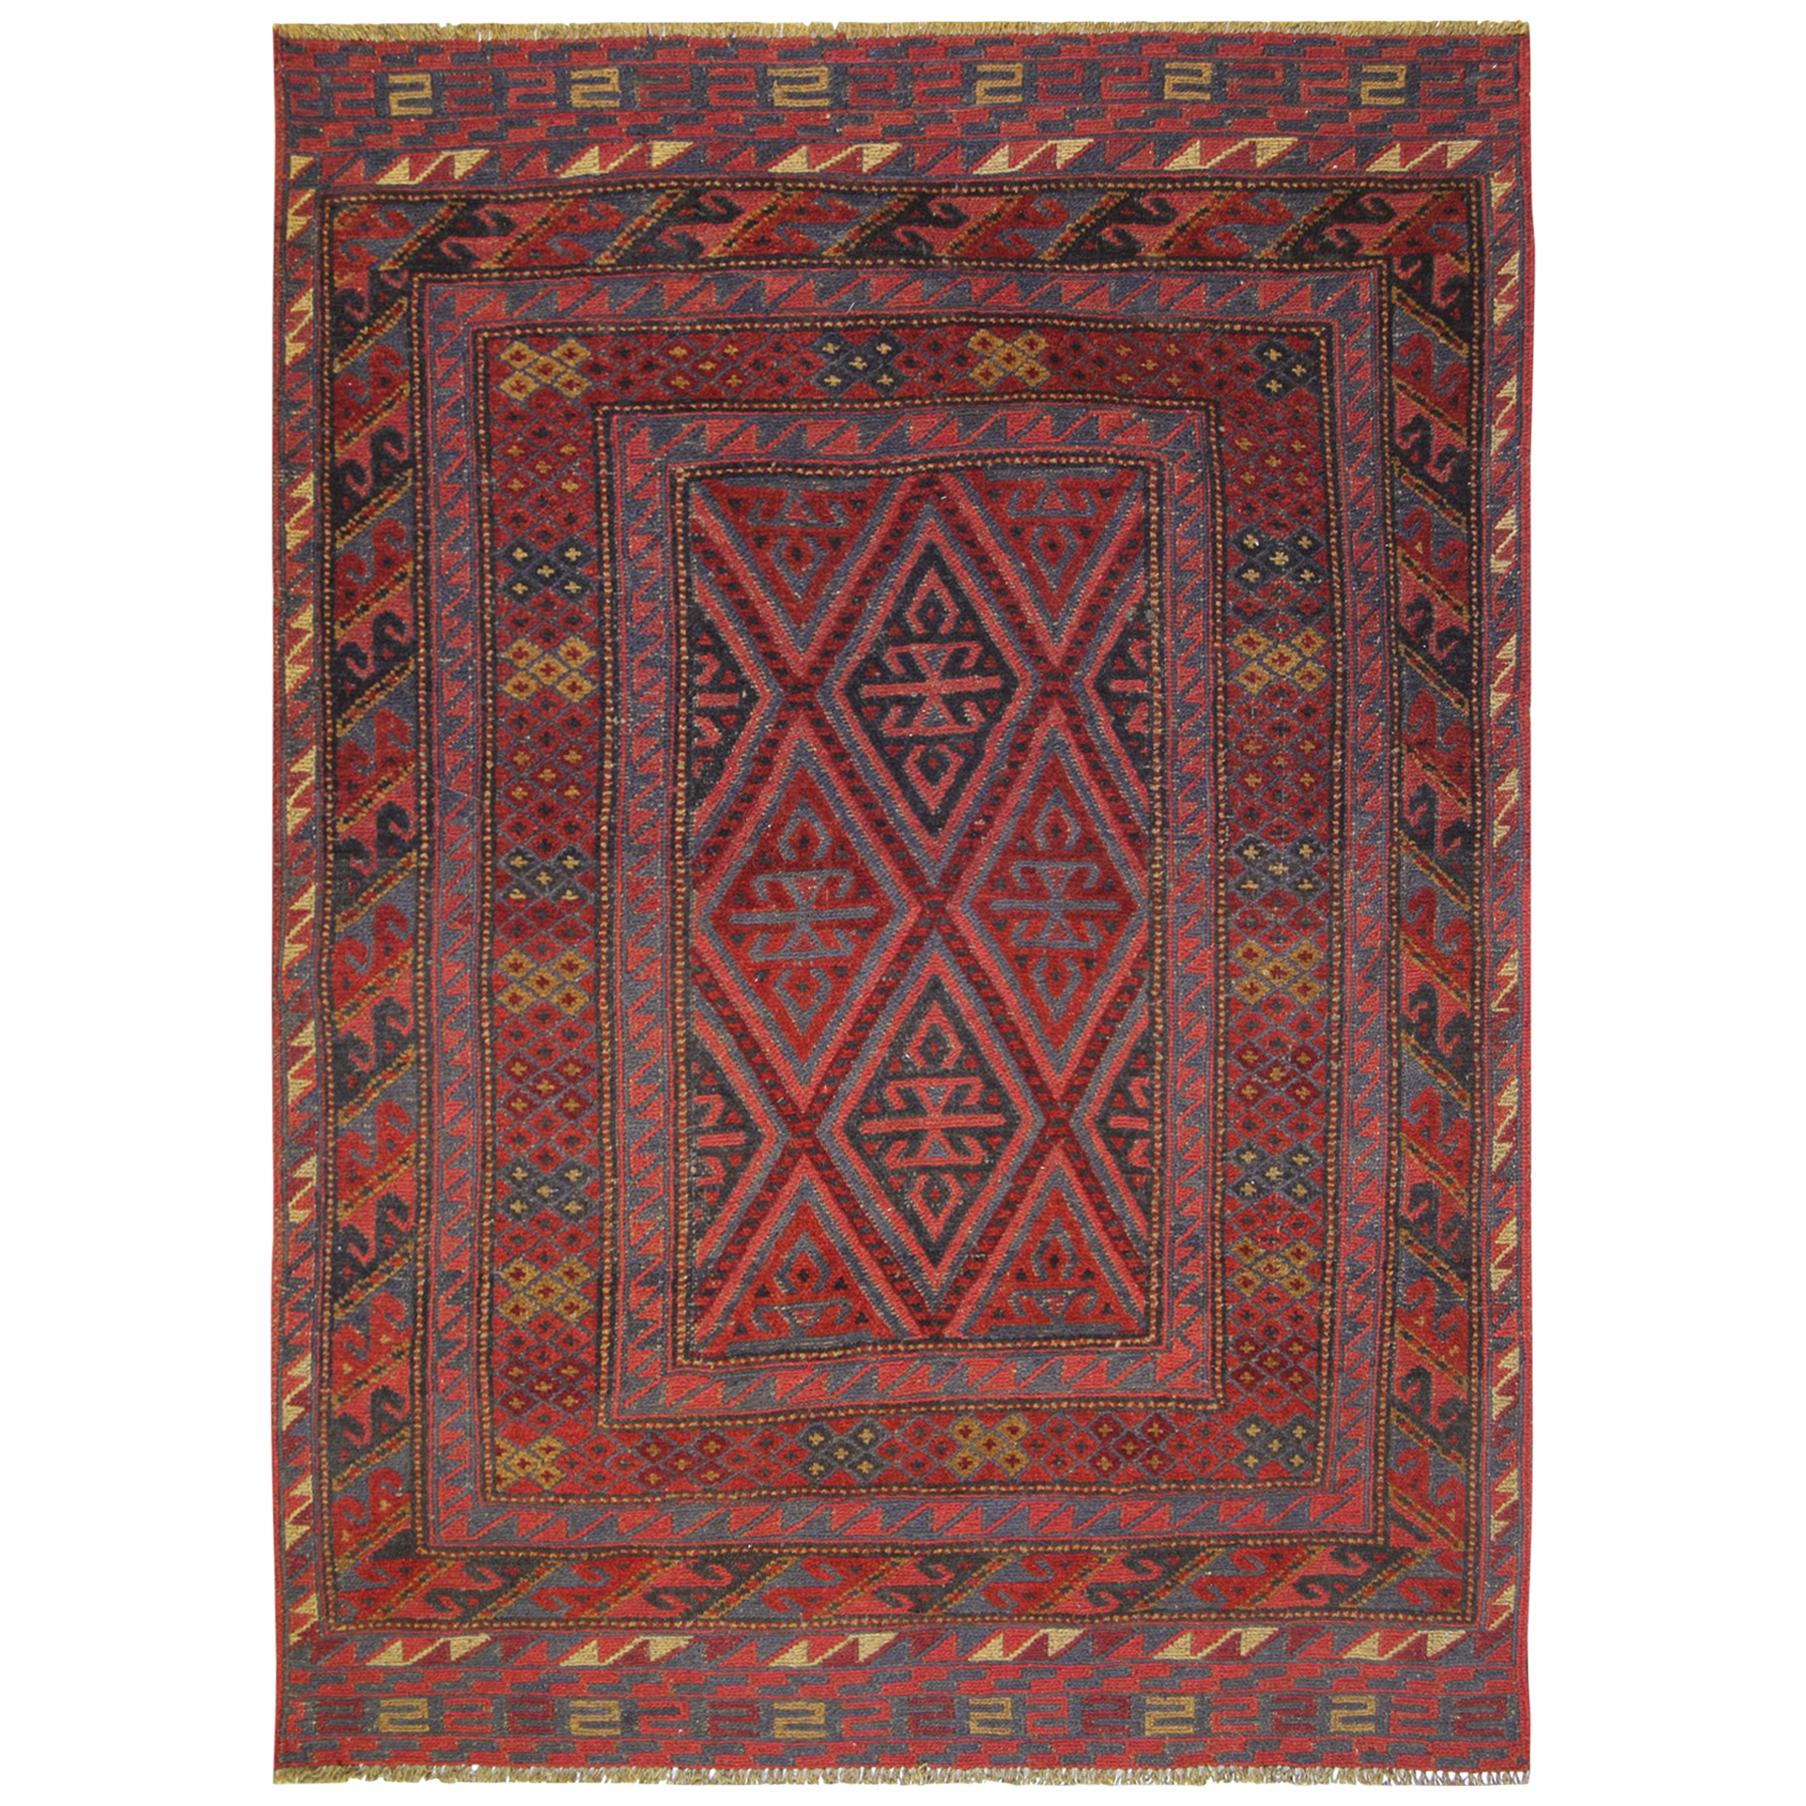 Handmade Carpet Oriental Rug Traditional Deep Red Rugs Square Turkmen Home Decor